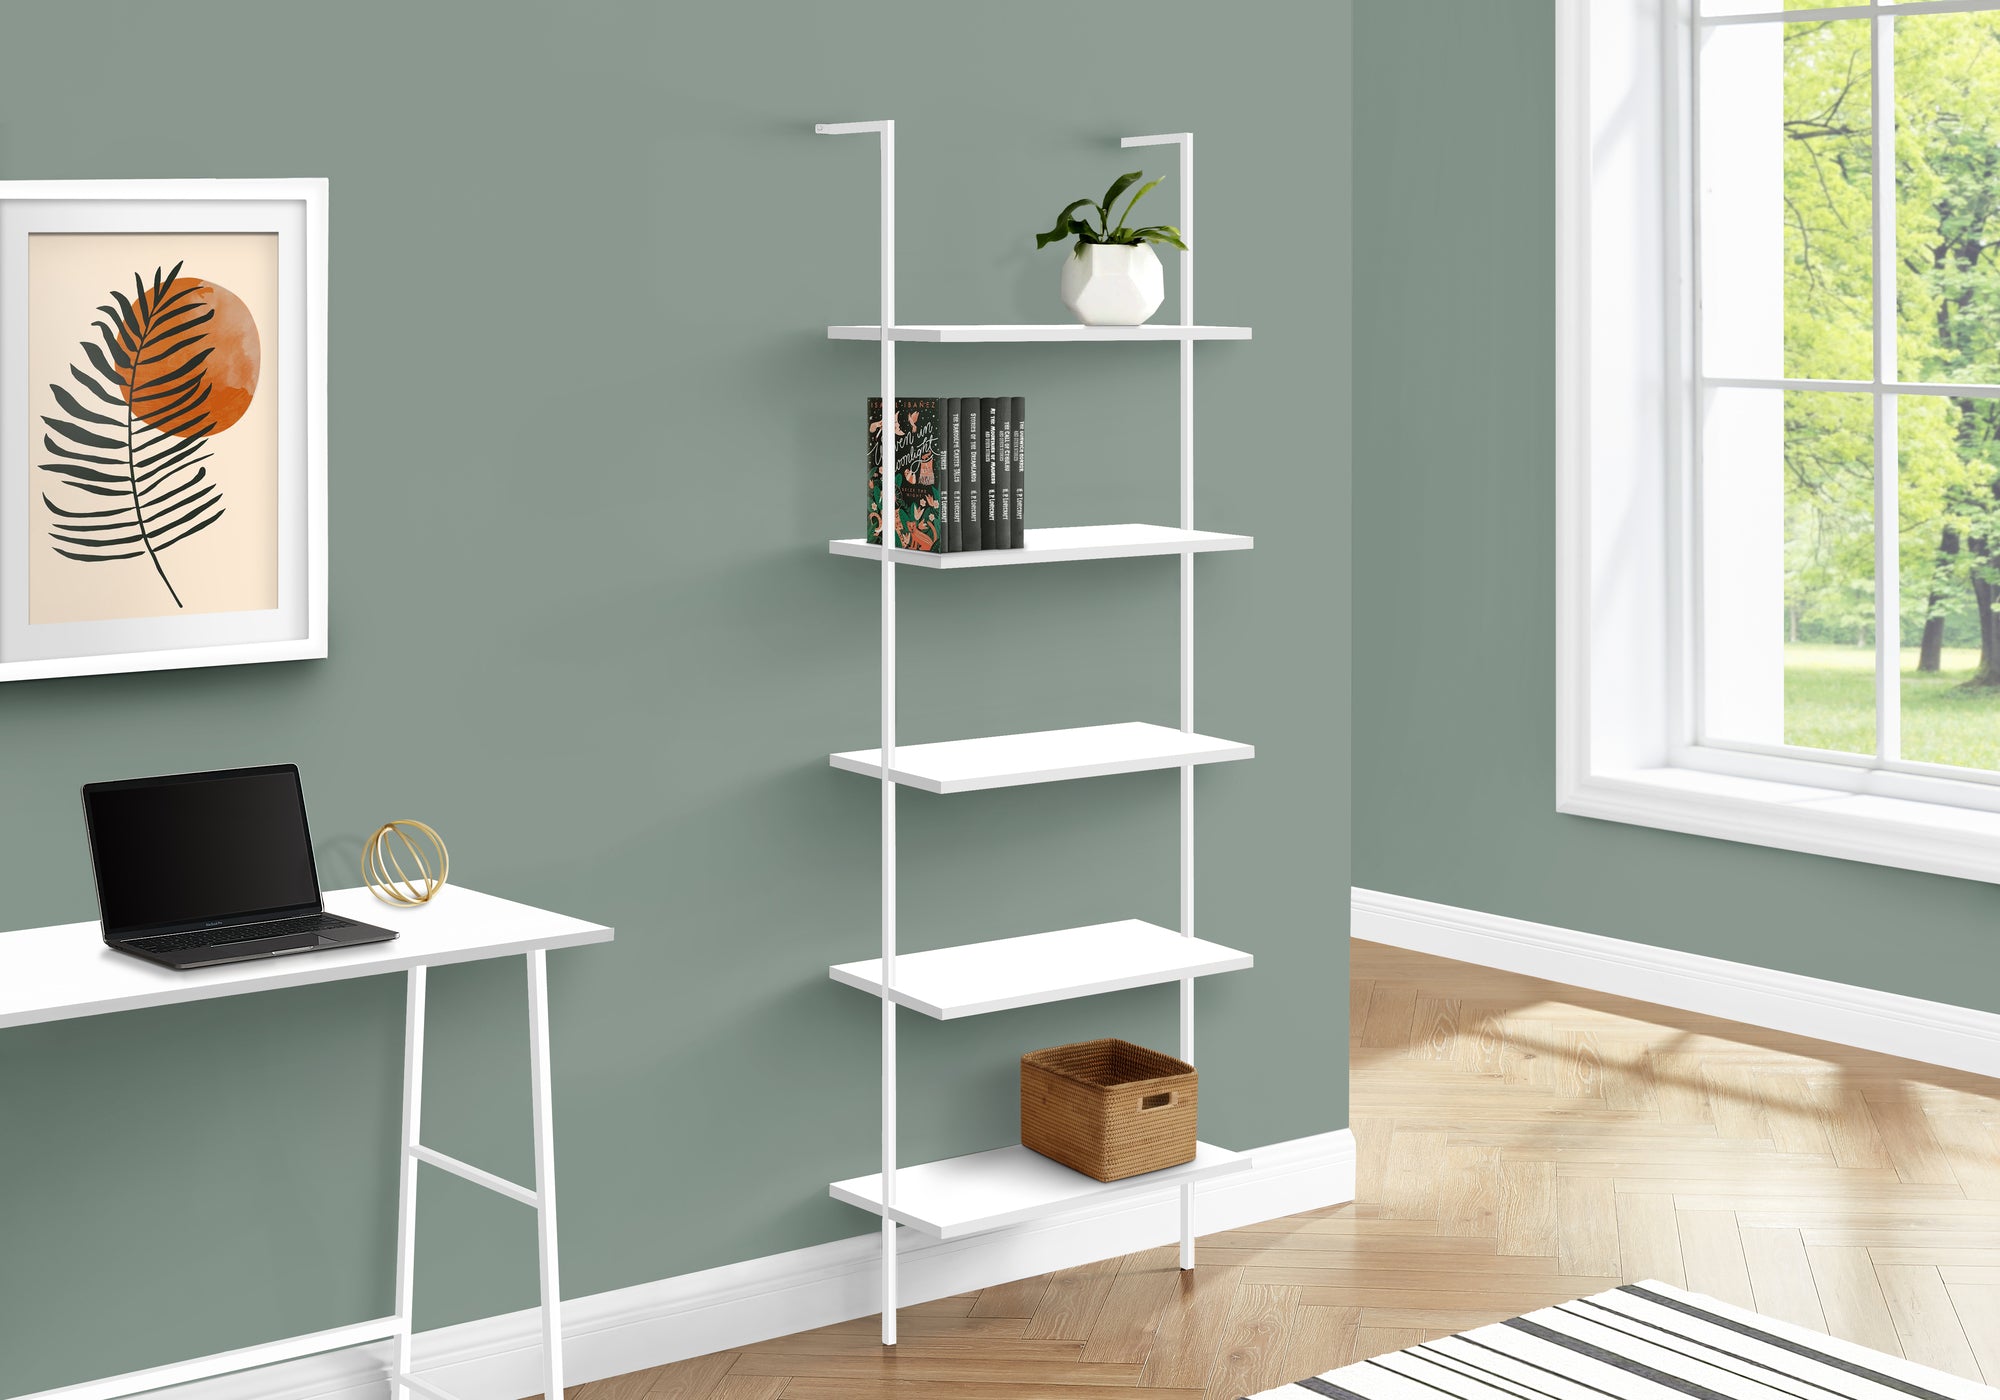 MN-313687    Bookcase - 5 Tier Etagere Ladder Bookshelf - Metal Frame - 72"H - White